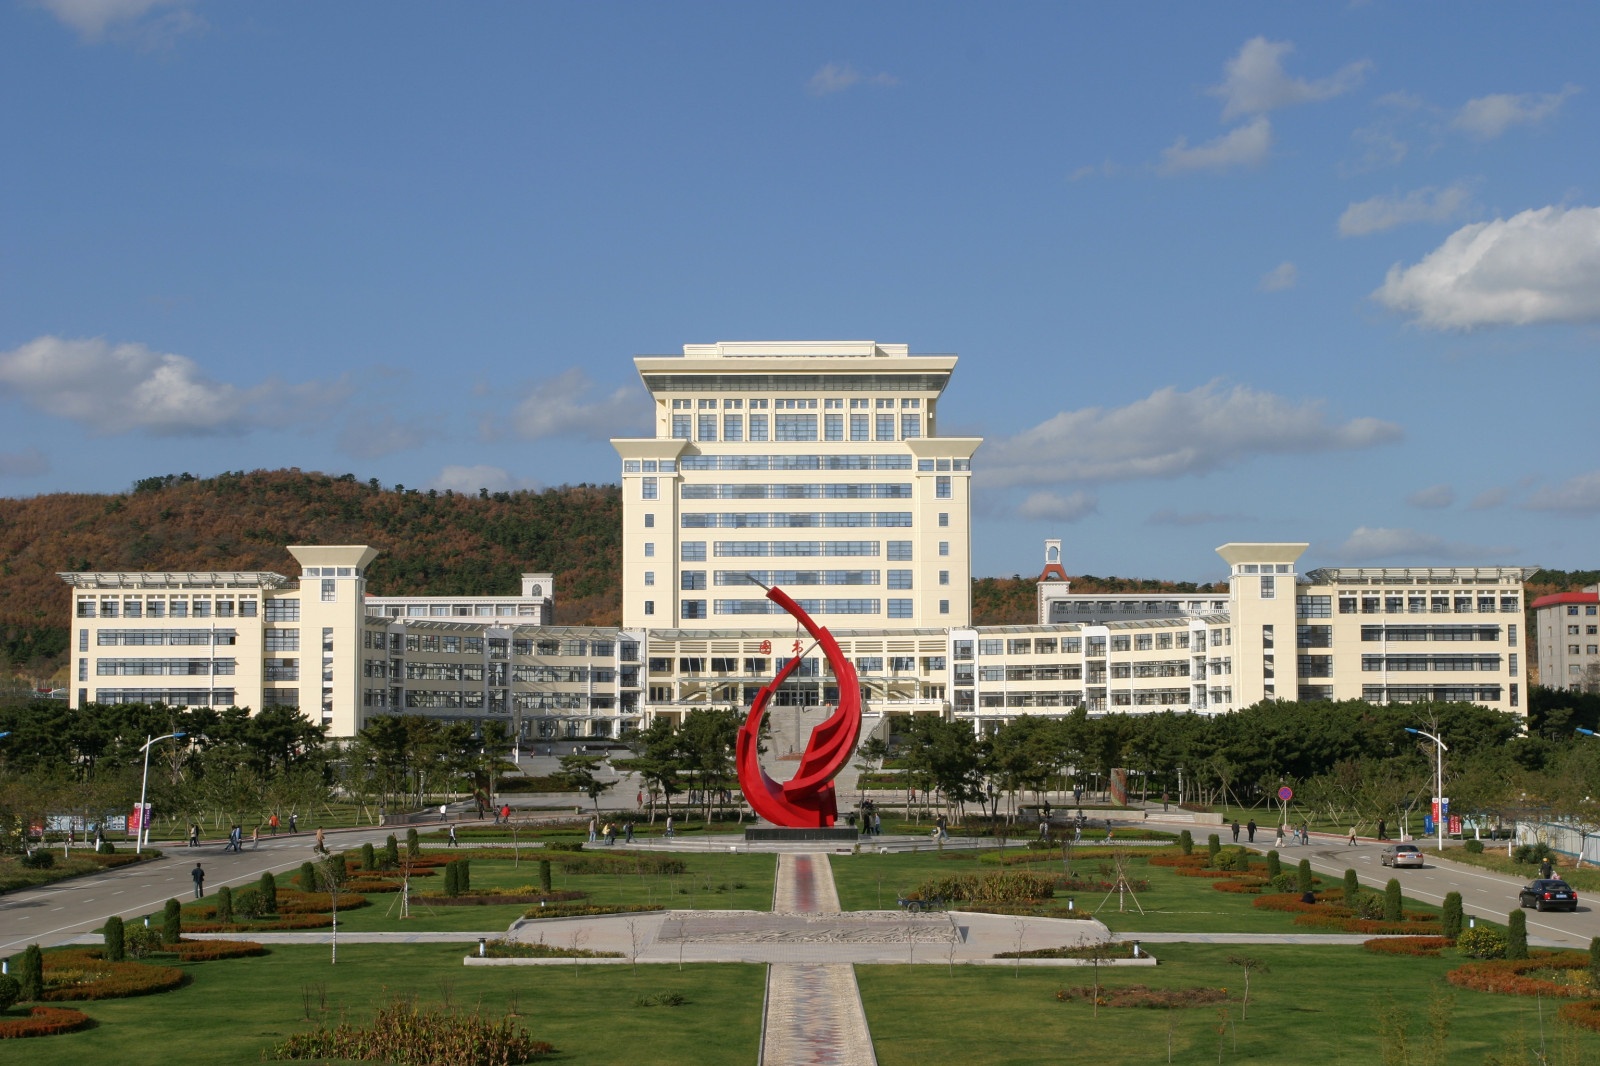 Weihai Campus of Shandong University